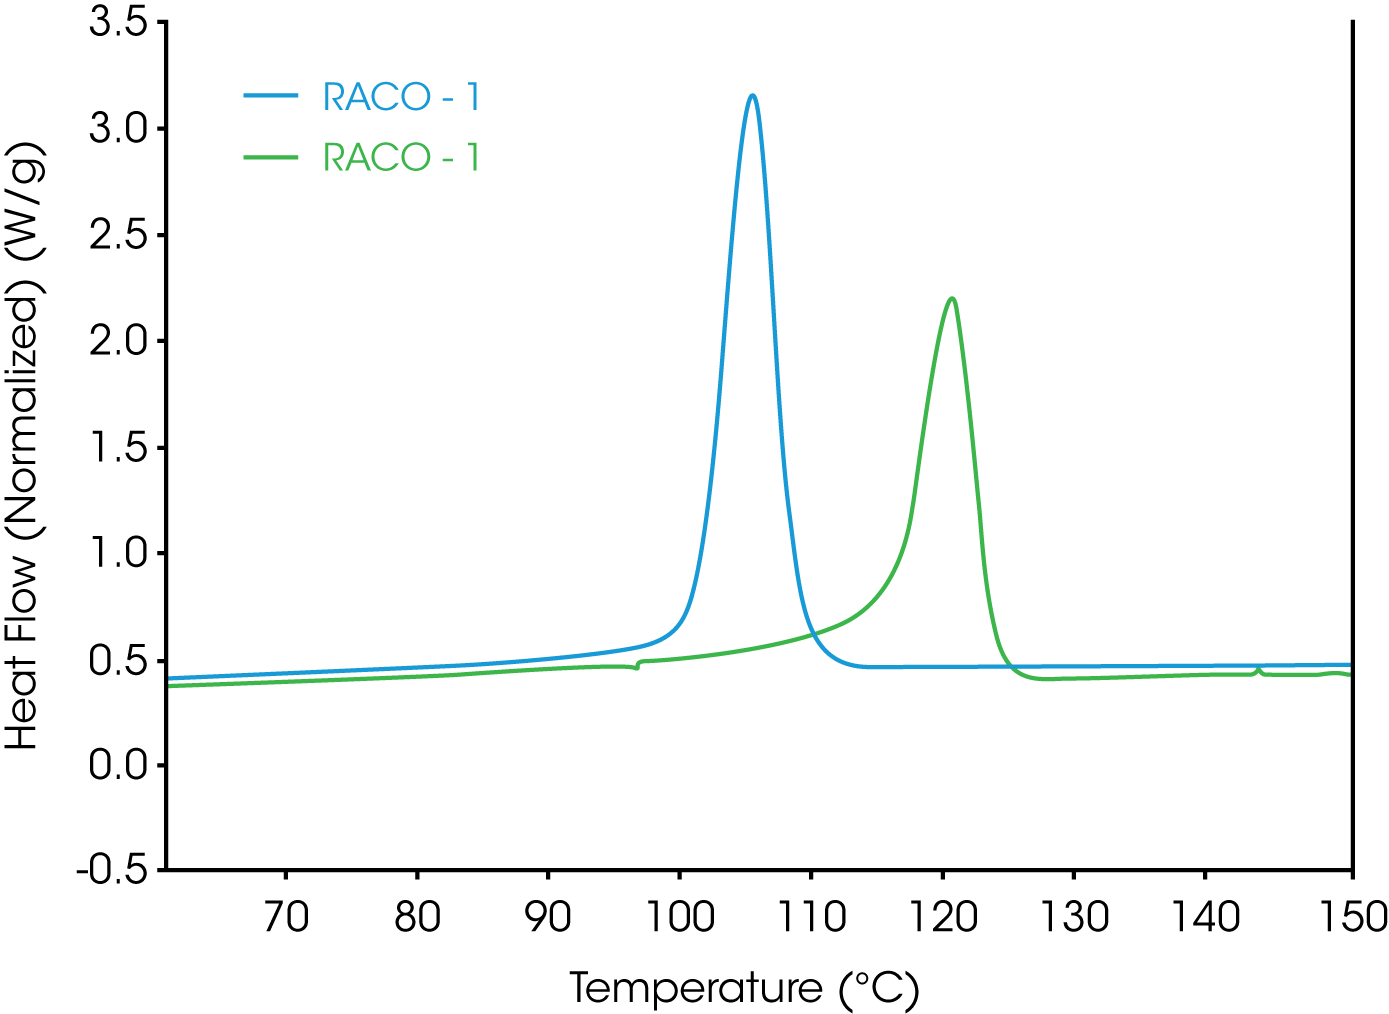 Figure 1. Cooling Profiles of Two Random Propylene / Ethylene Copolymers